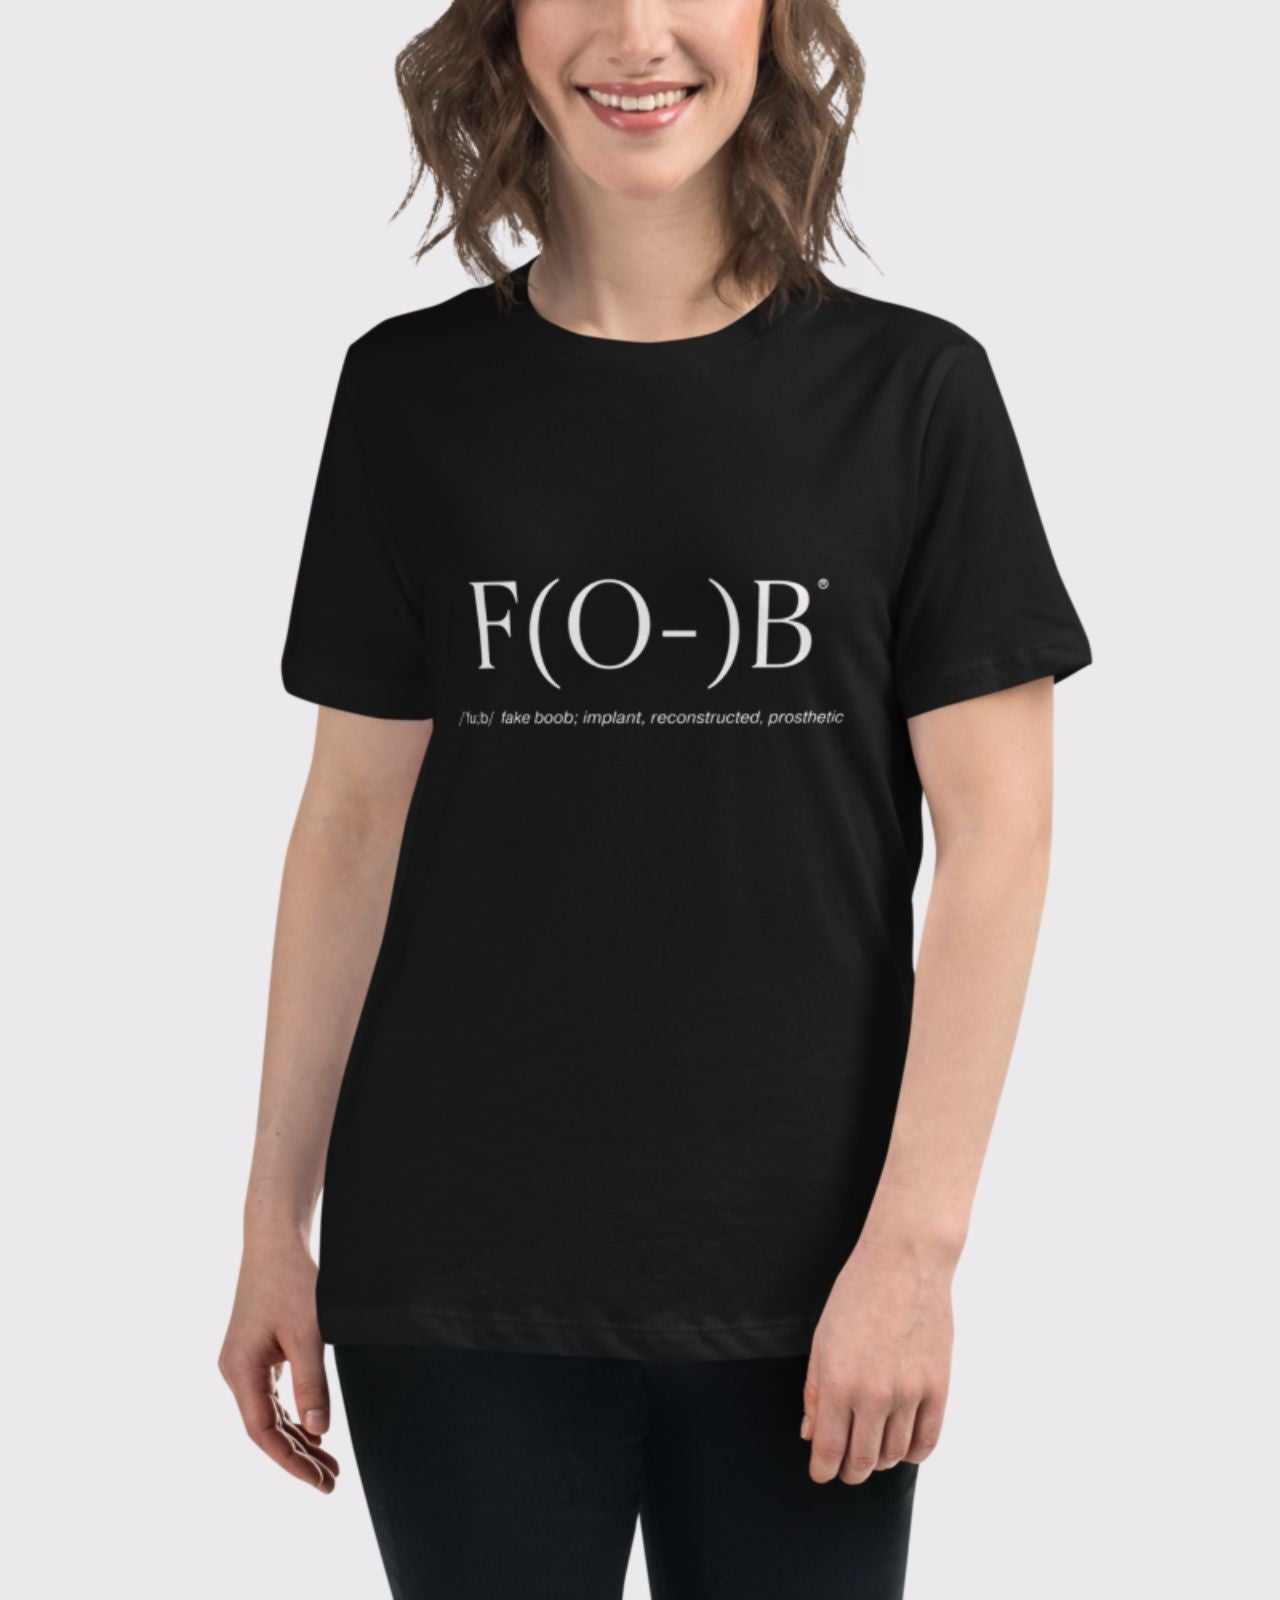 AnaOno Intimates: F(o-)B® Printed T-Shirt